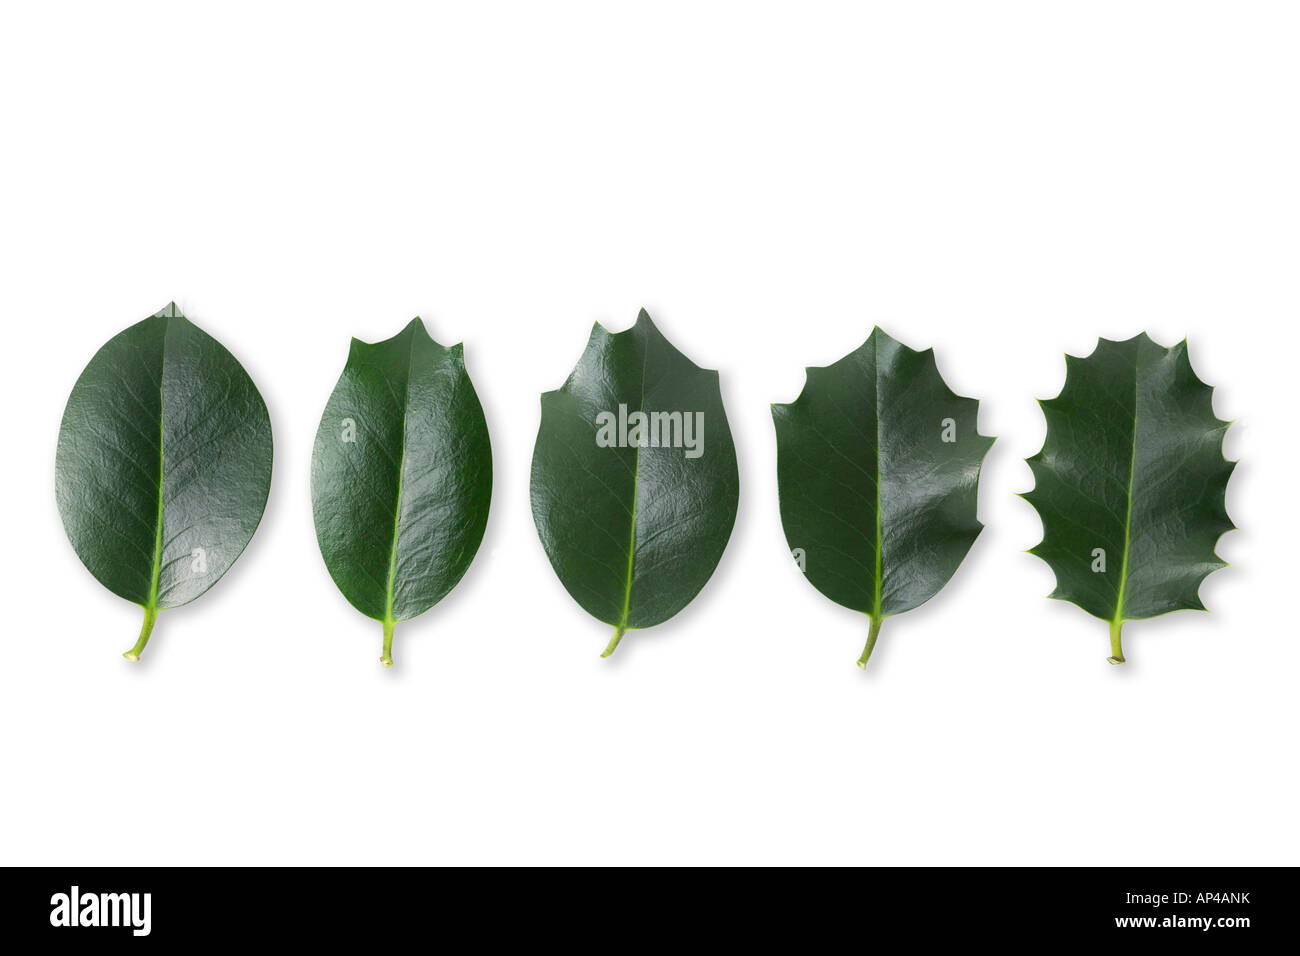 Diversi Inglese Holly foglie (Ilex aquifolium), lo stesso albero. Différentes feuilles de Houx commun questioni d'onu même arbre Foto Stock